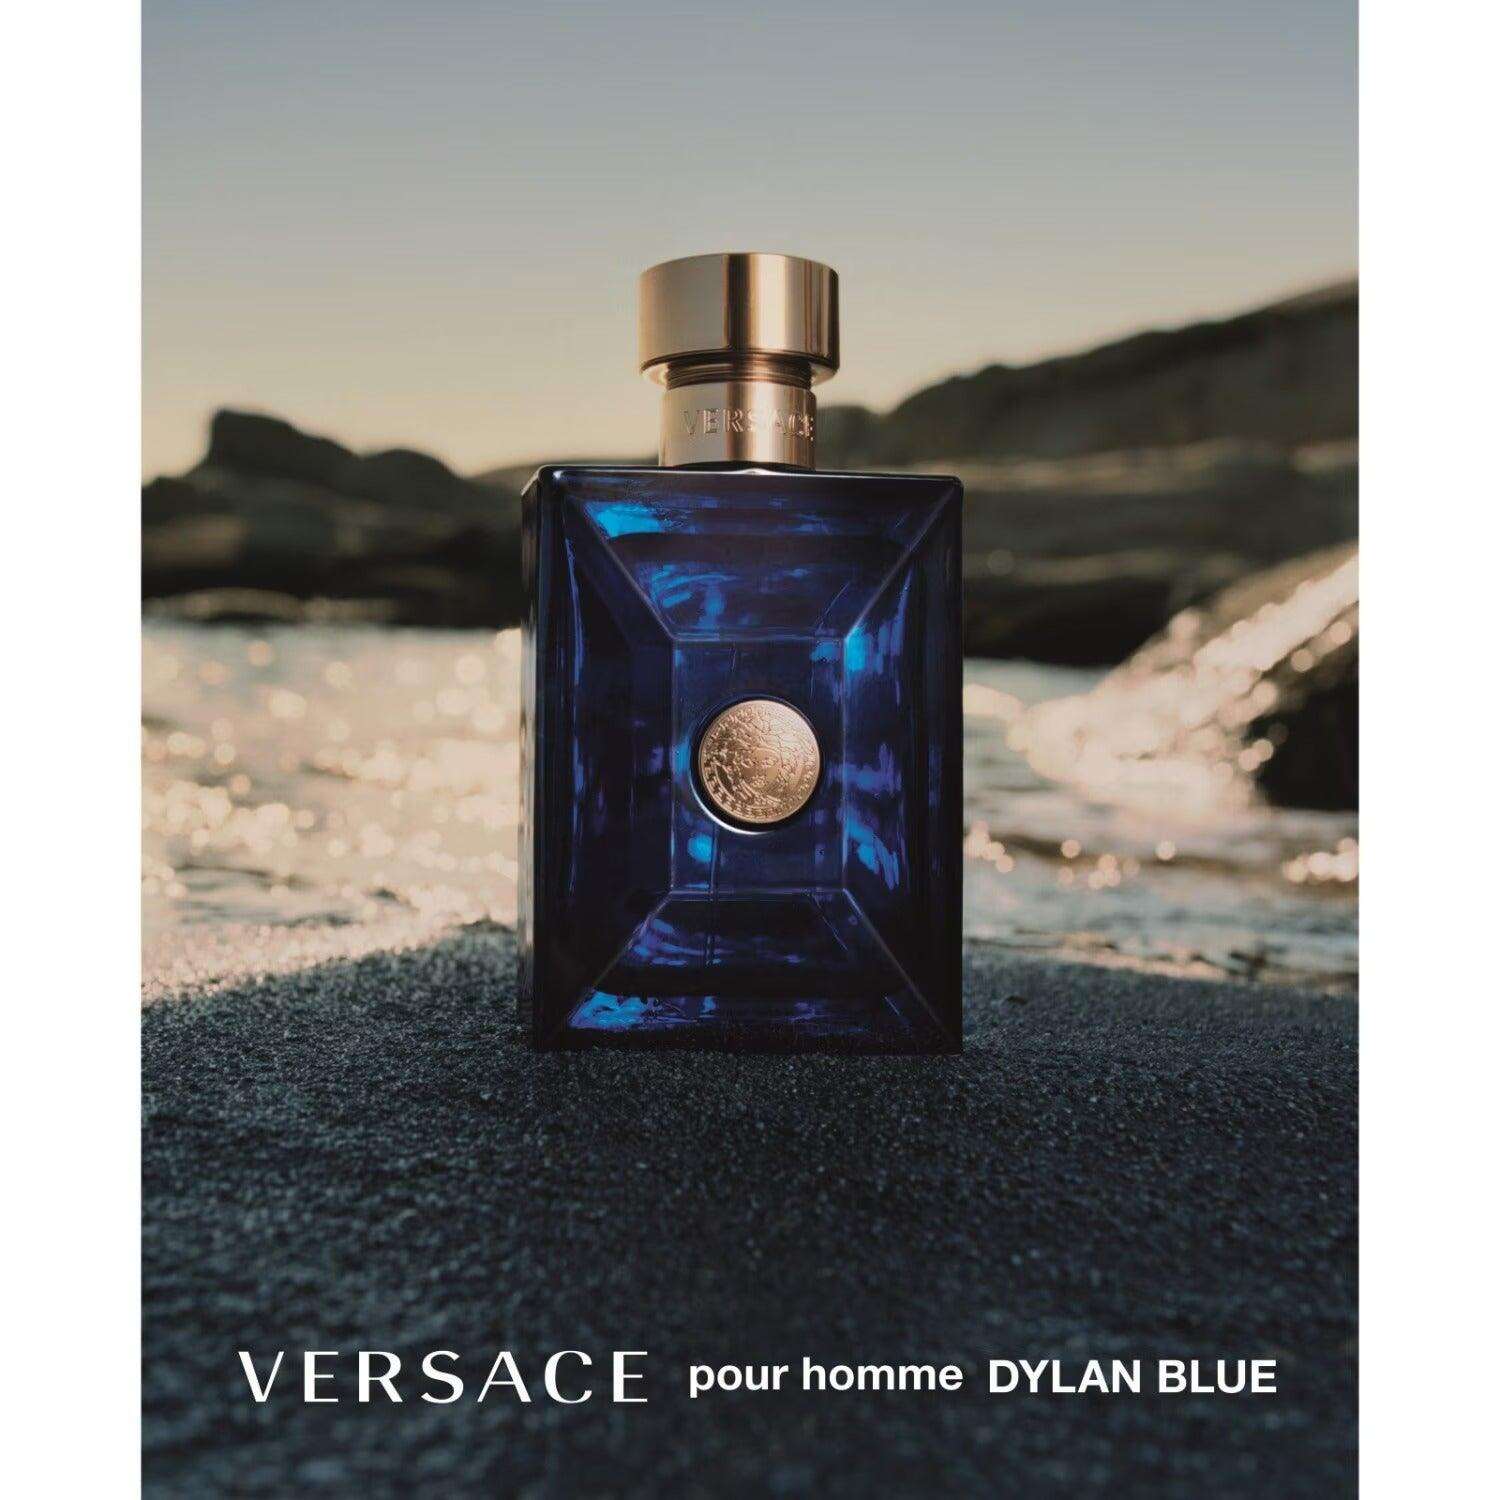 Versace DYLAN BLUE 100ml